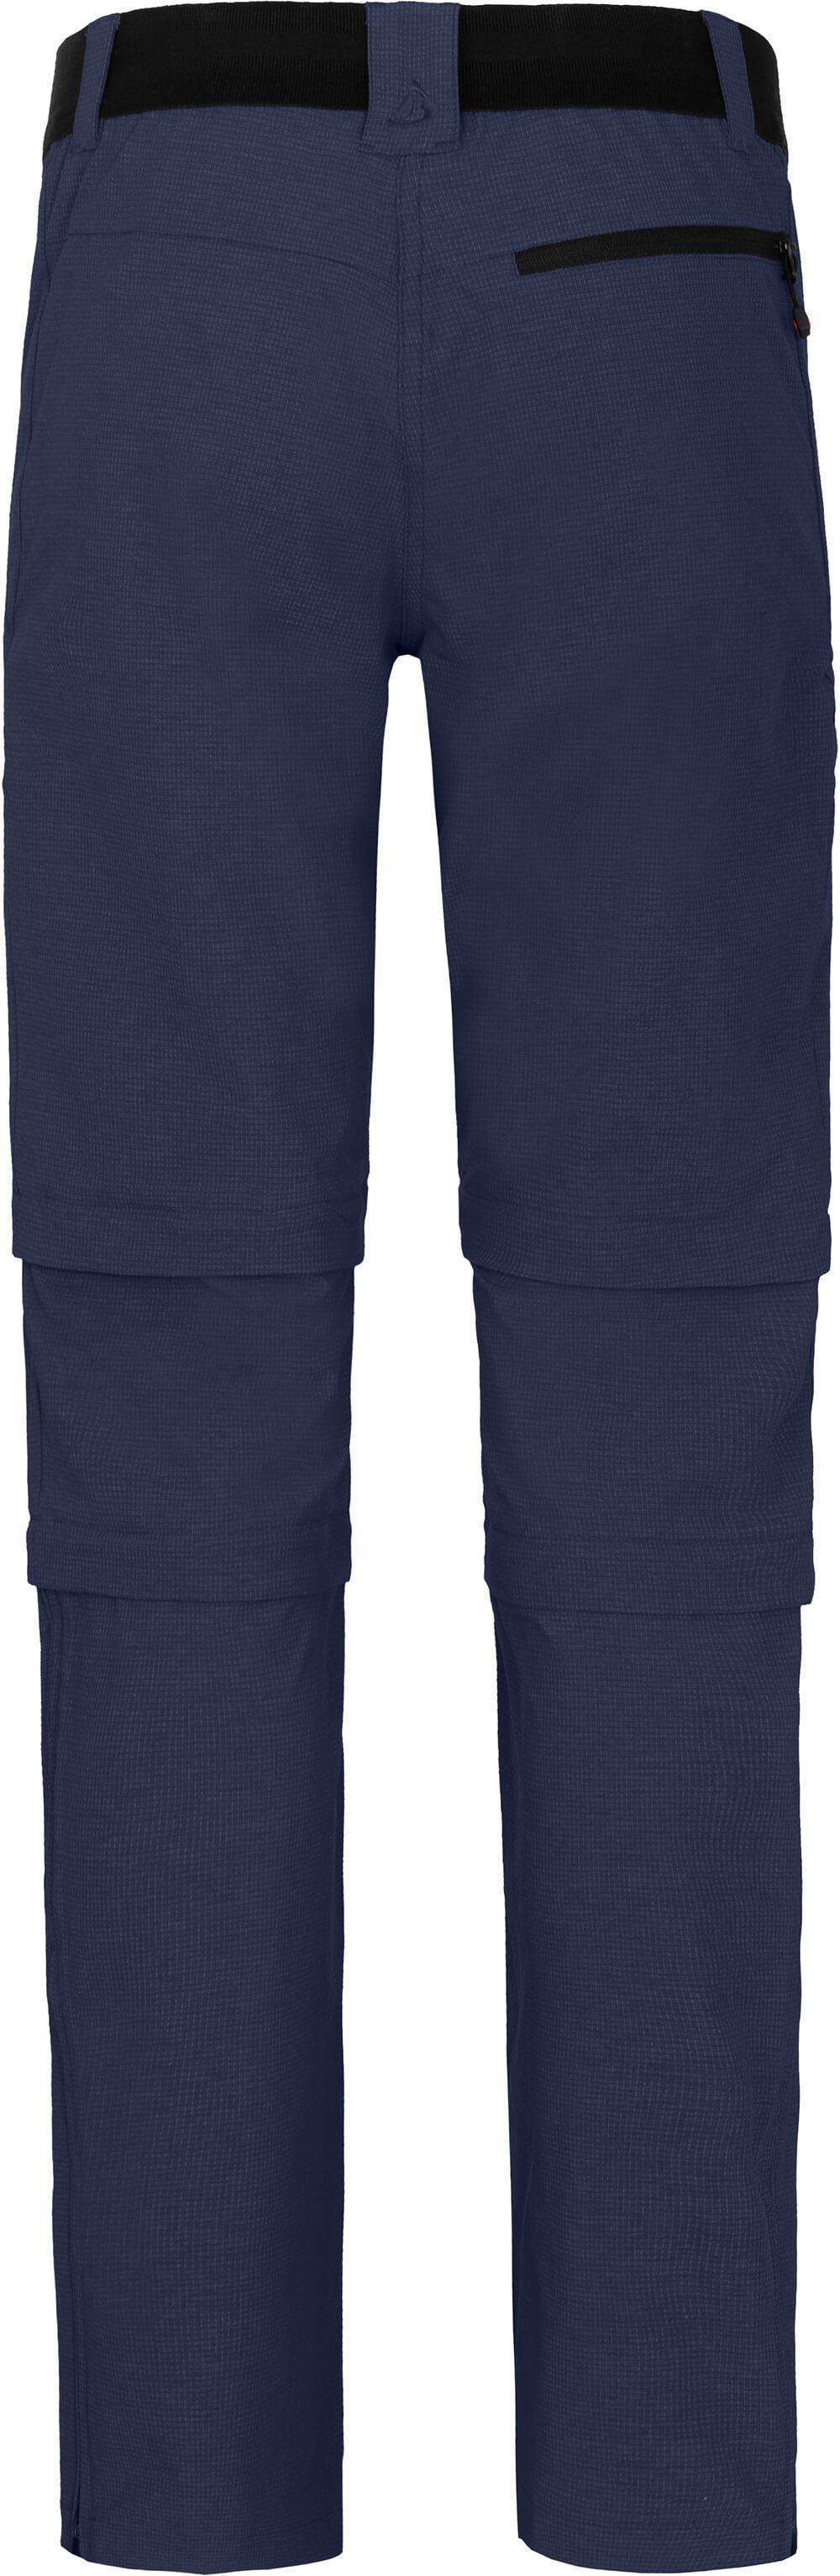 Bergson Zip-off-Hose PORI Doppel peacoat Wanderhose, blau elastisch, T-ZIPP Damen robust mit Normalgrößen, Zipp-Off